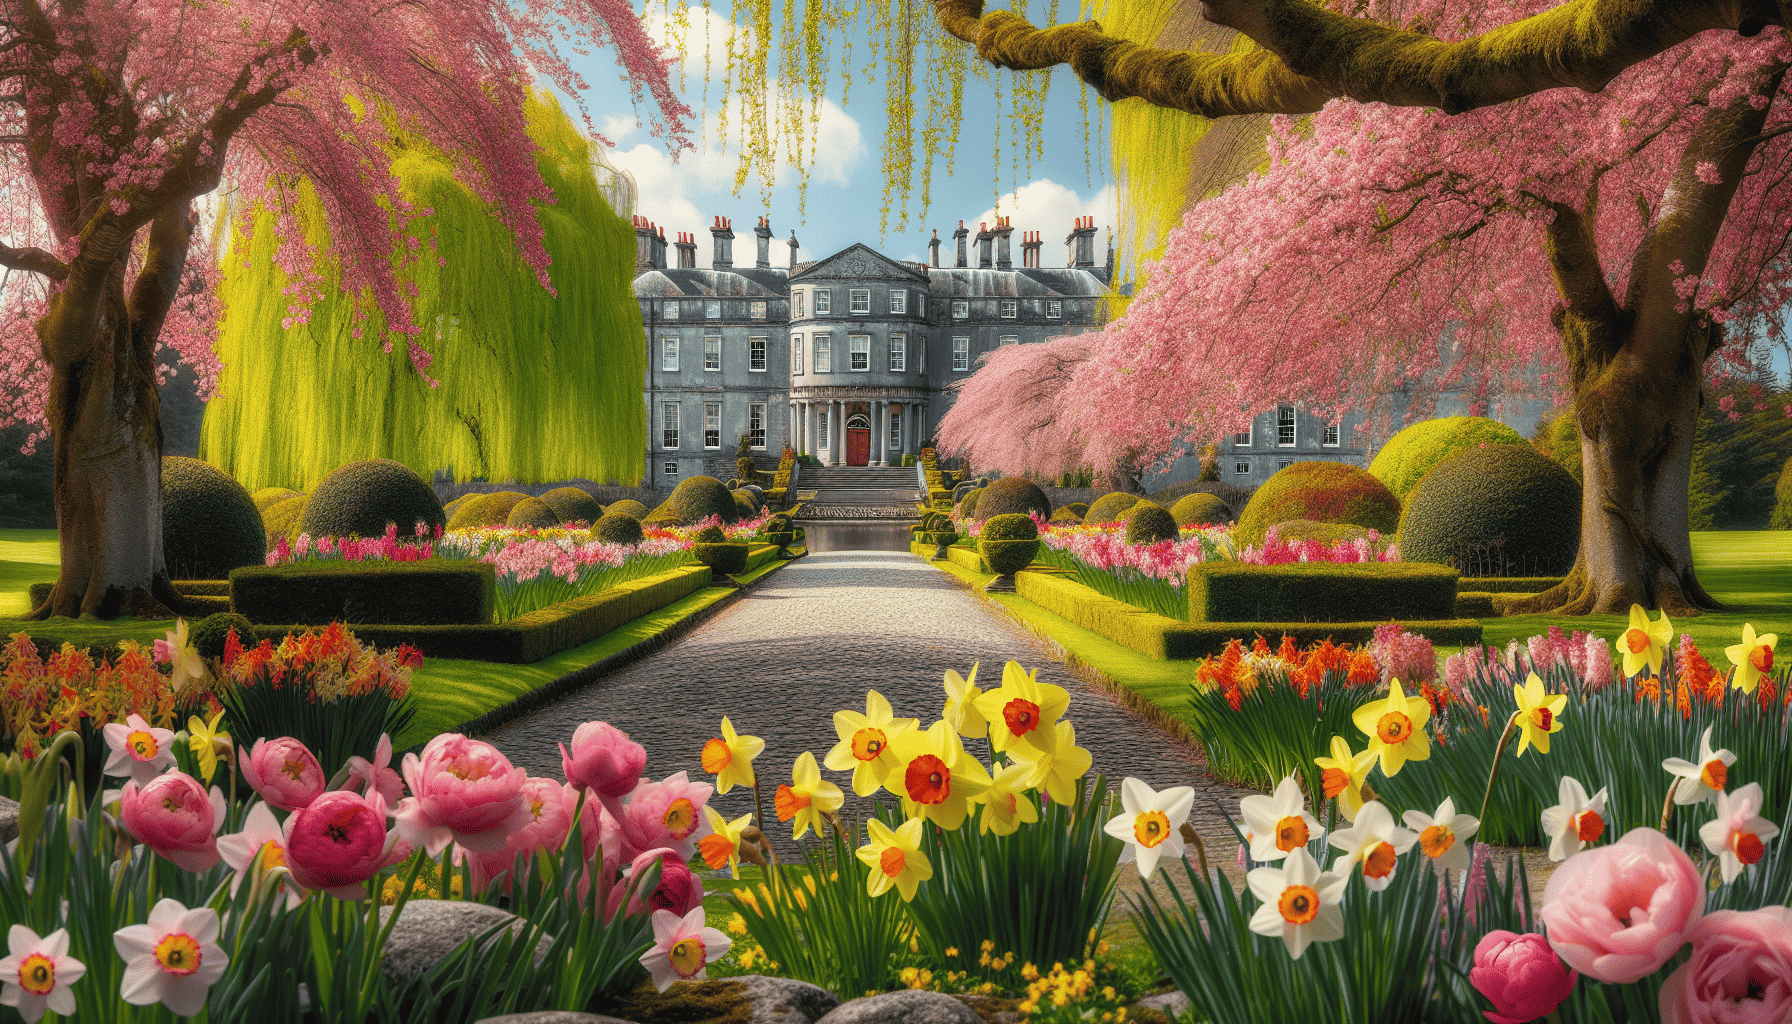 Powerscourt Estate in full bloom during spring